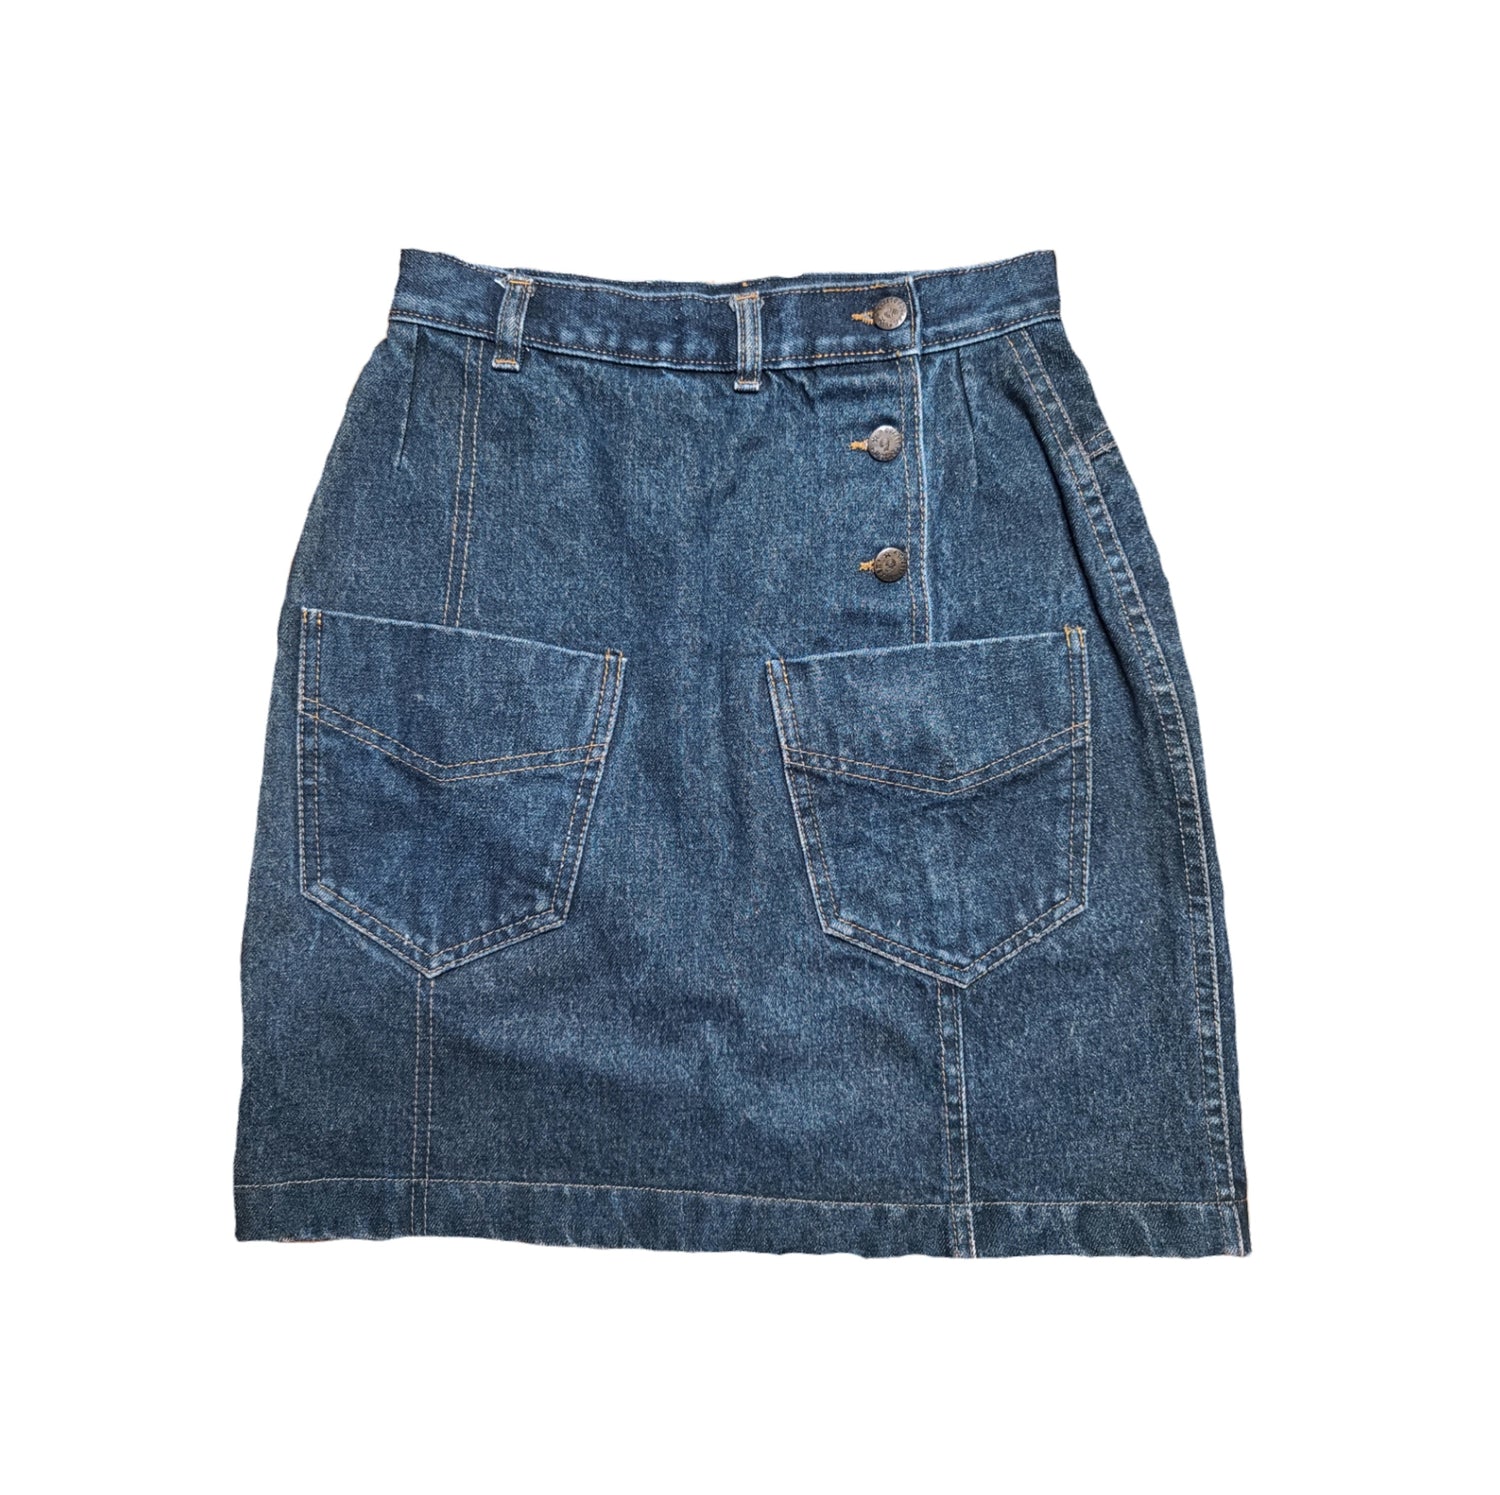 Jean skirt jupe 90s streetwear usa 